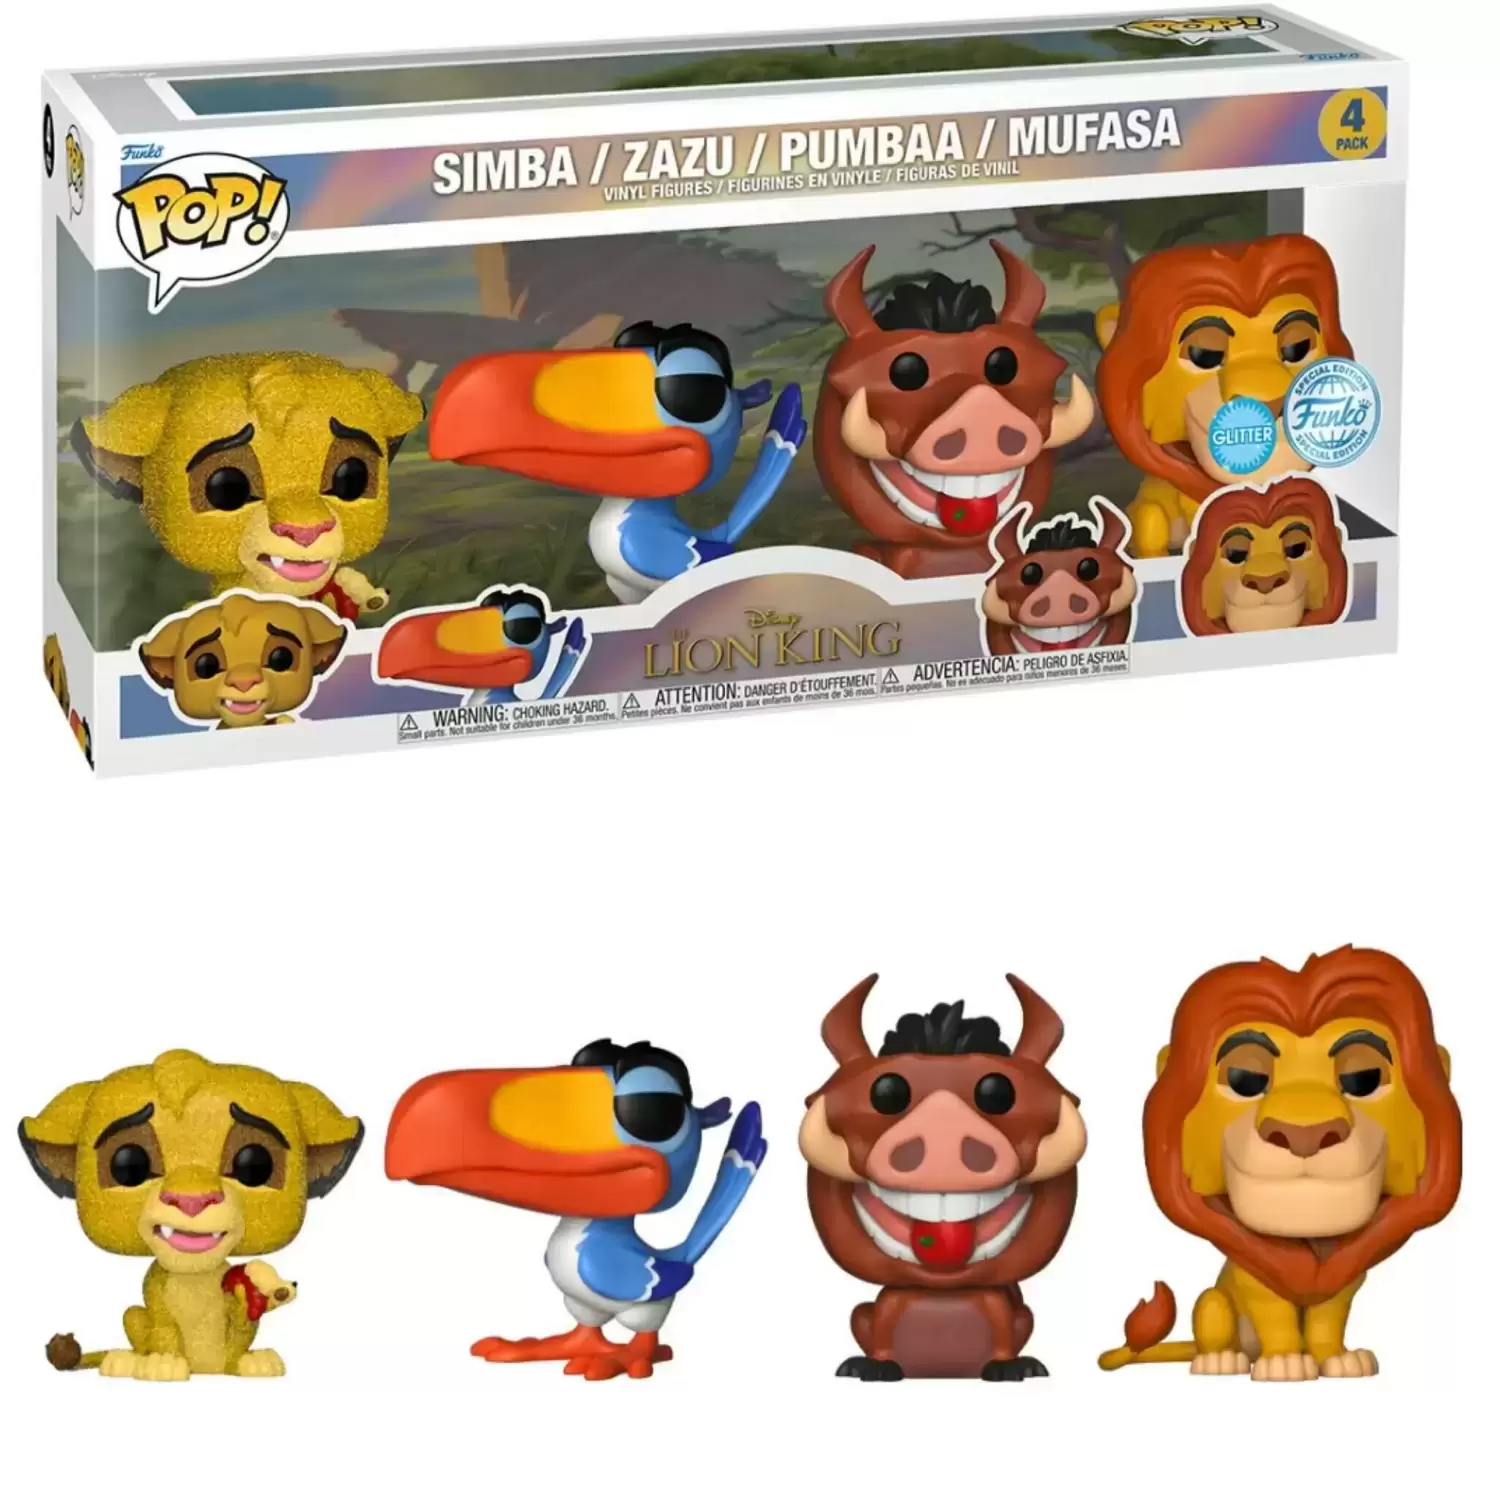 POP! Disney - The Lion King - Simba, Zazu, Pumbaa & Mufasa 4 Pack